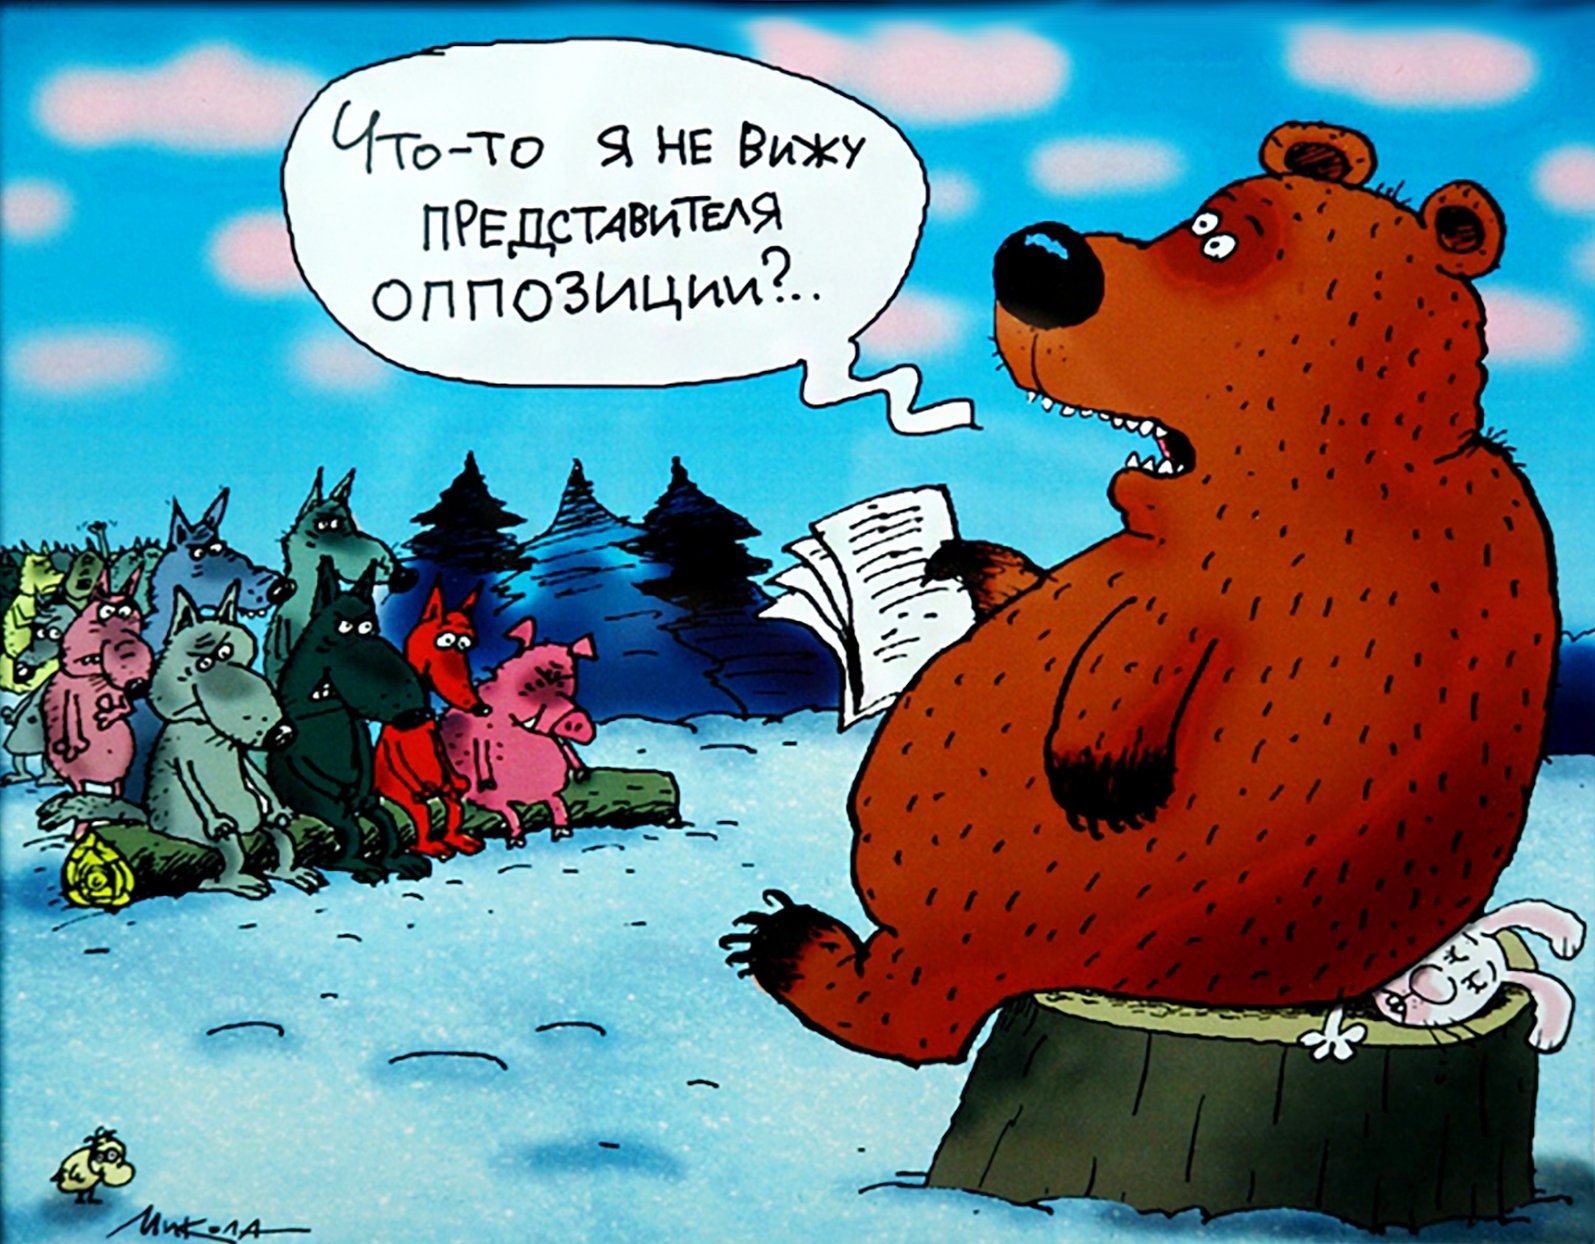 Звери дурачок. Шутки про медведя. Медведь карикатура. Анекдоты про медведей смешные. Шутки про медведя в России.